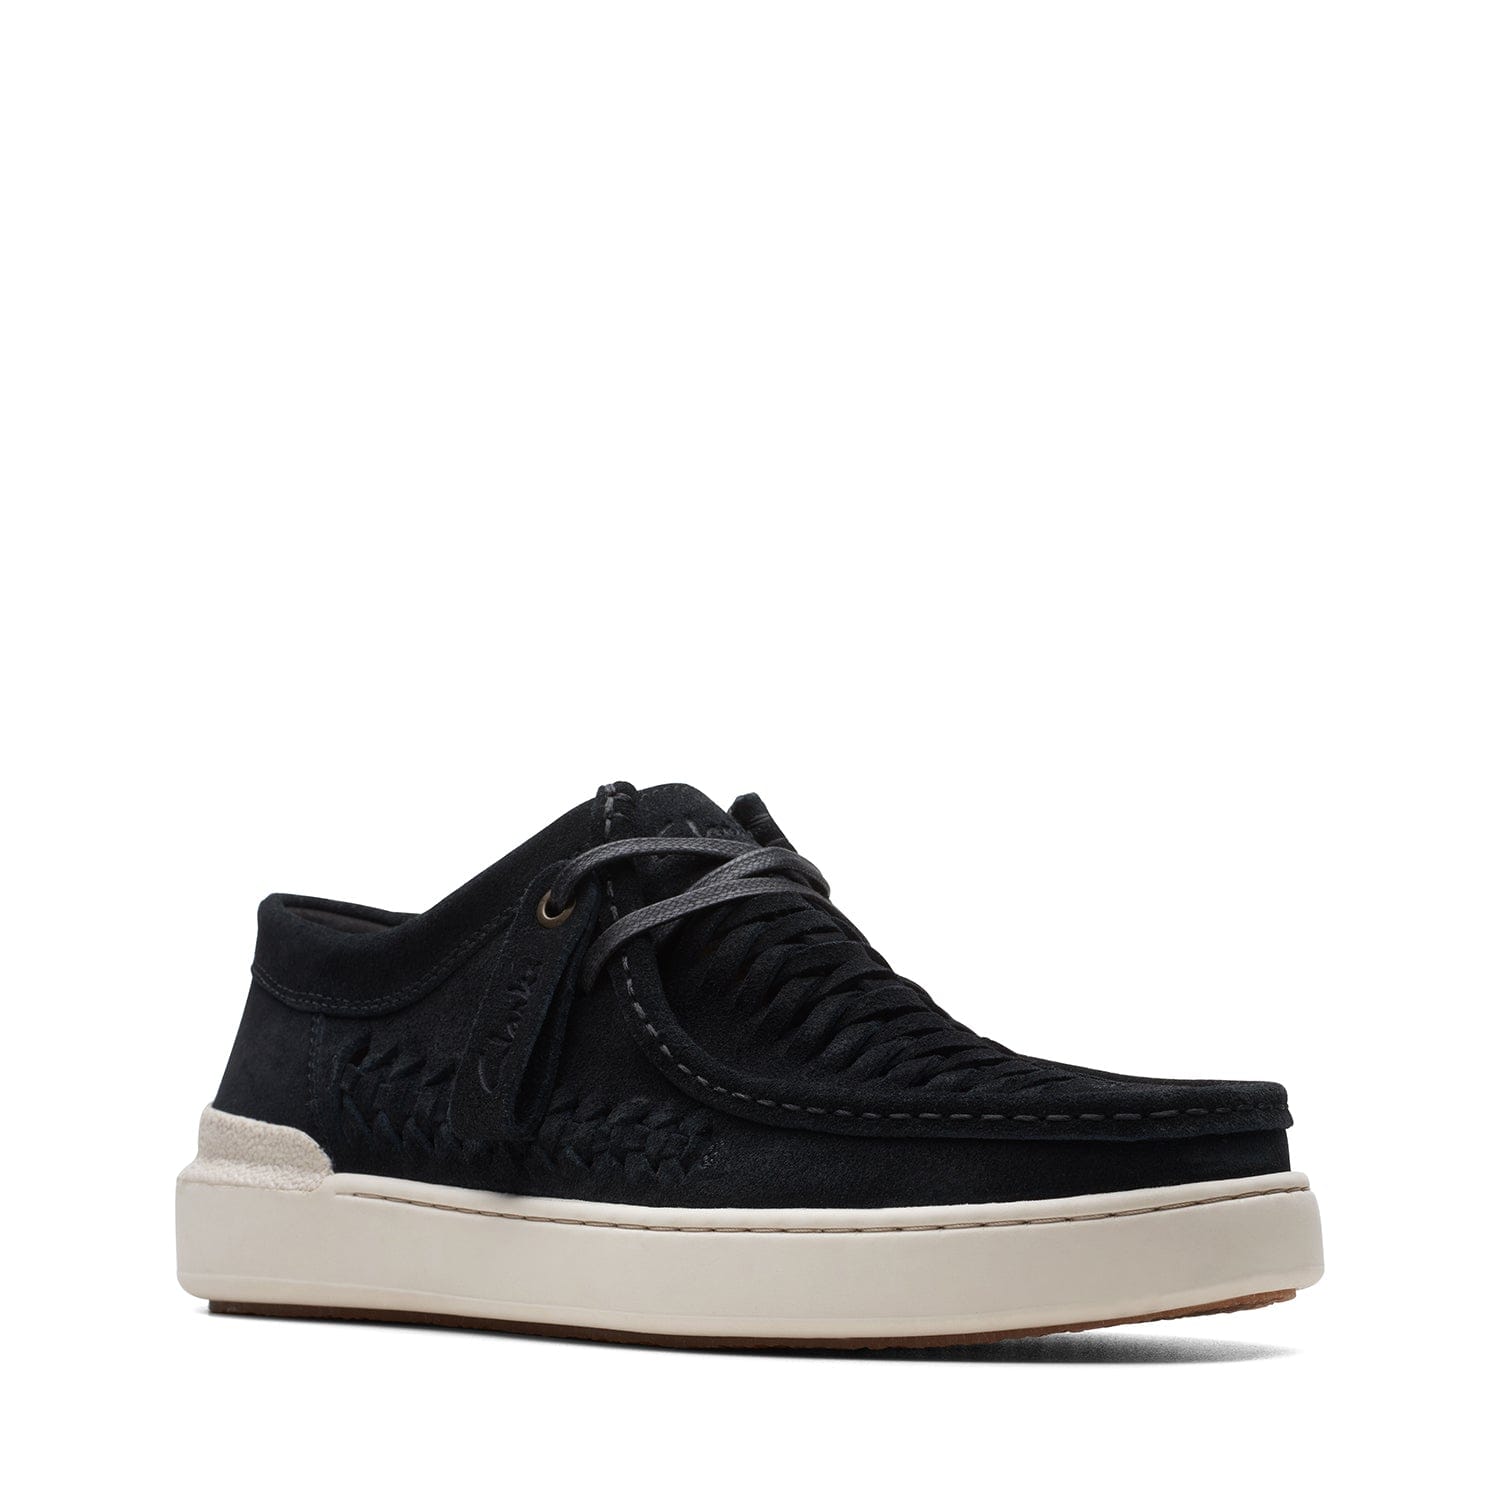 Clarks Courtliteweave - Shoes - Black Weave - 261724497 - G Width (Standard Fit)